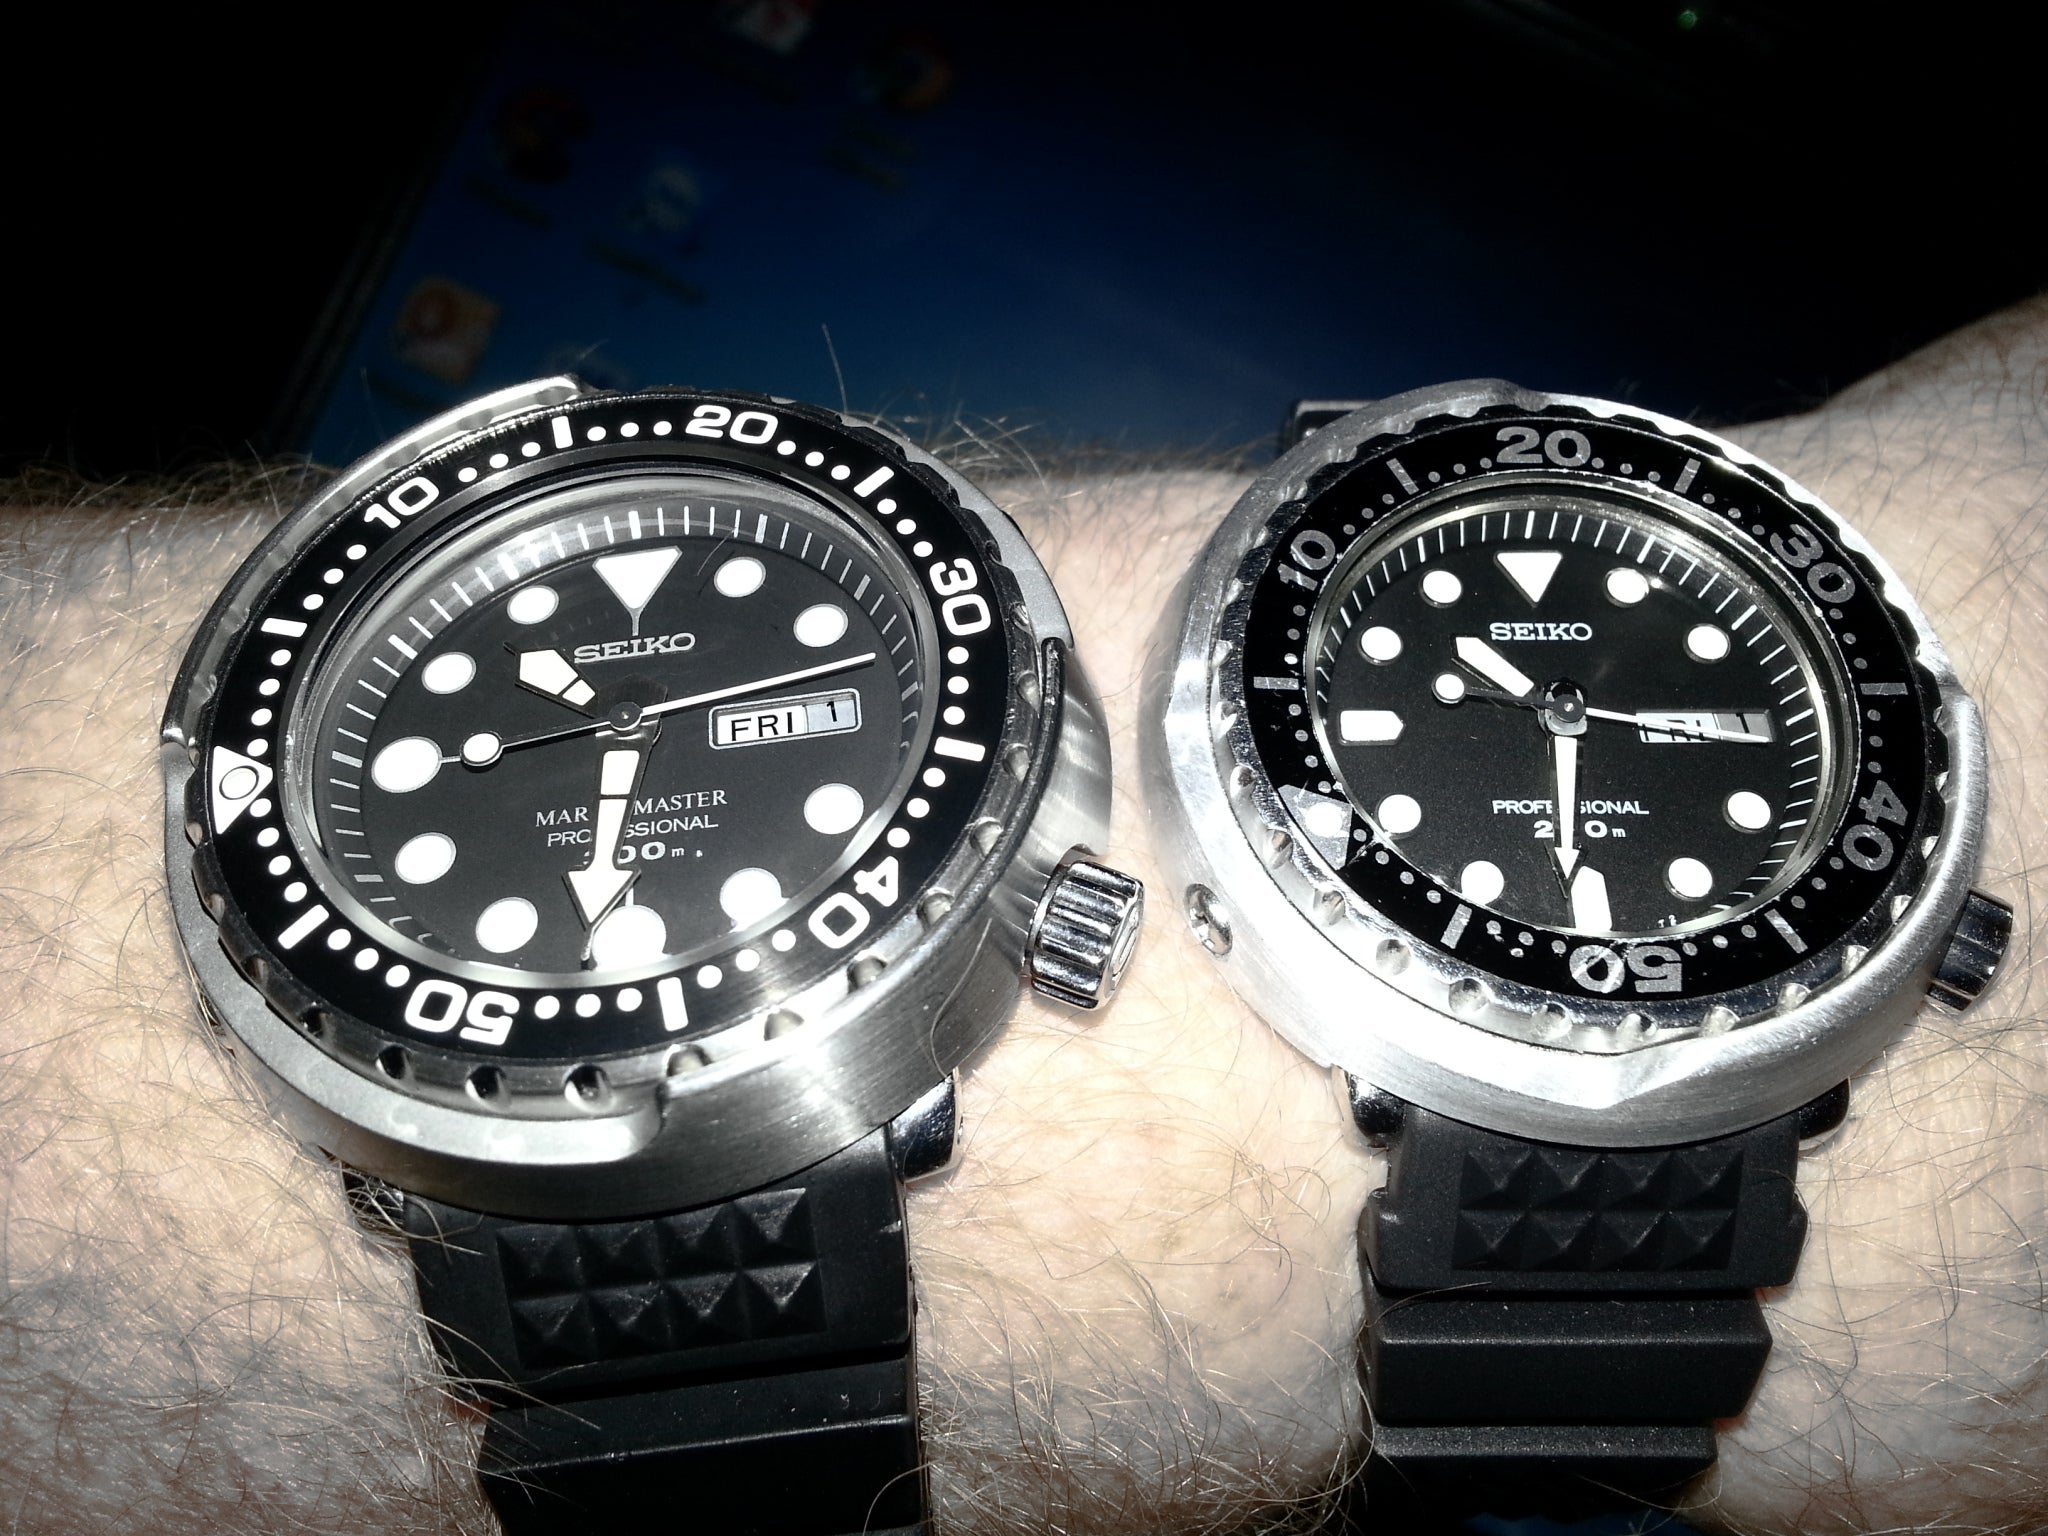 7C43-6020 Mini Tuna and SBBN015 Tuna size comparo . . . | The Watch Site